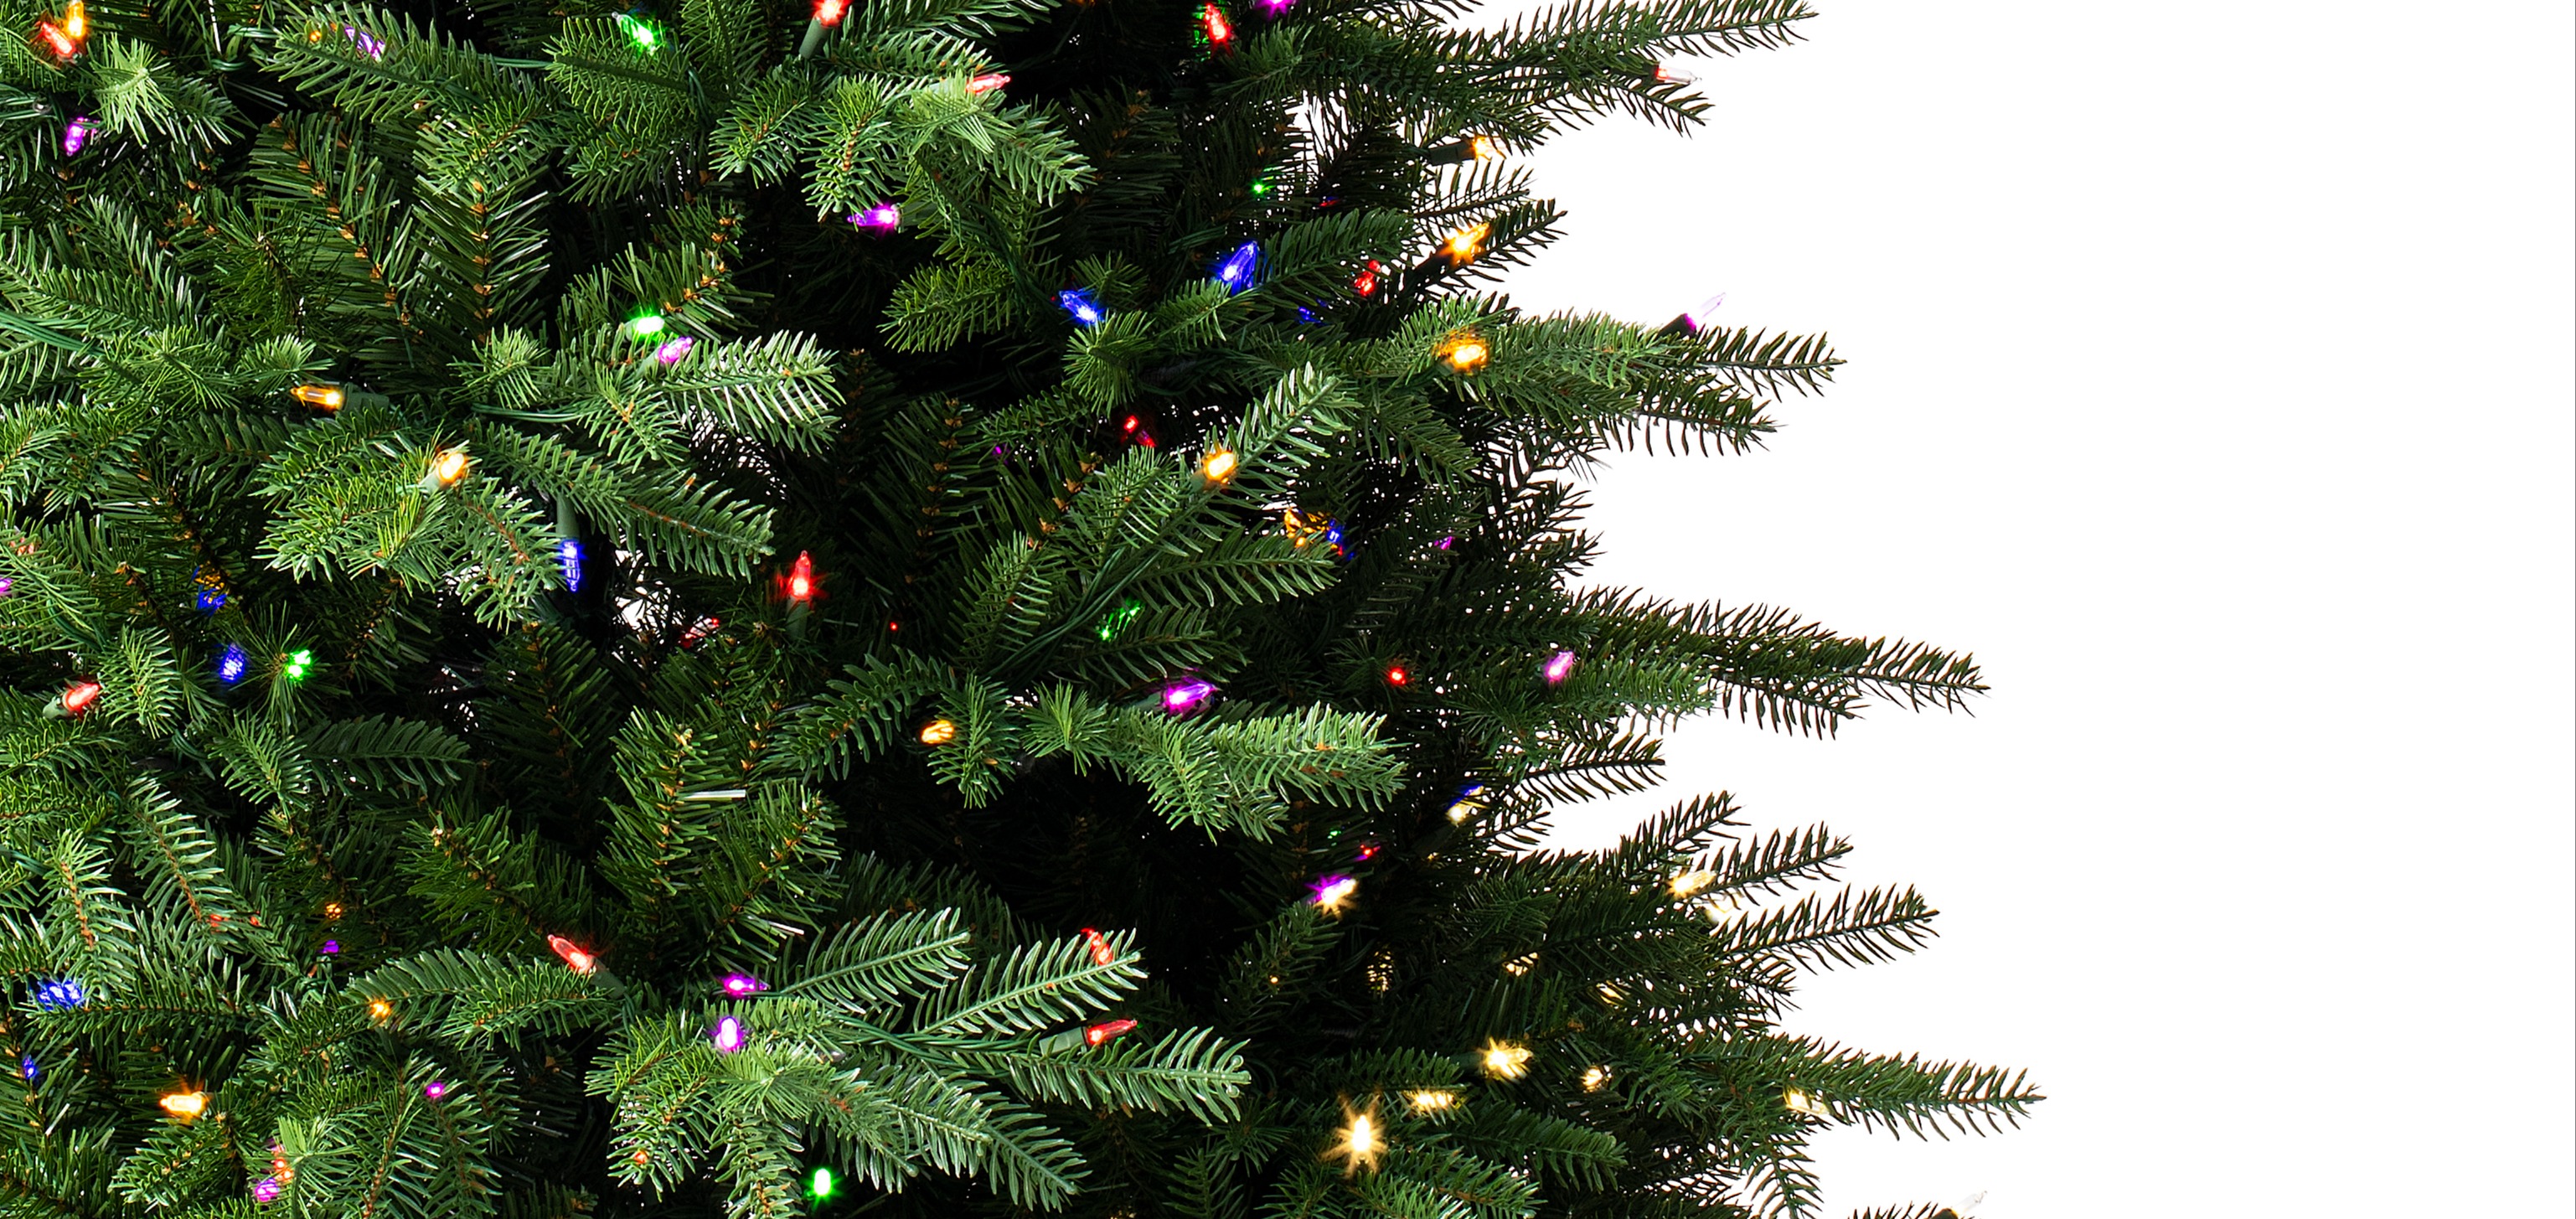 Vickerman colored lights on artificial Christmas tree